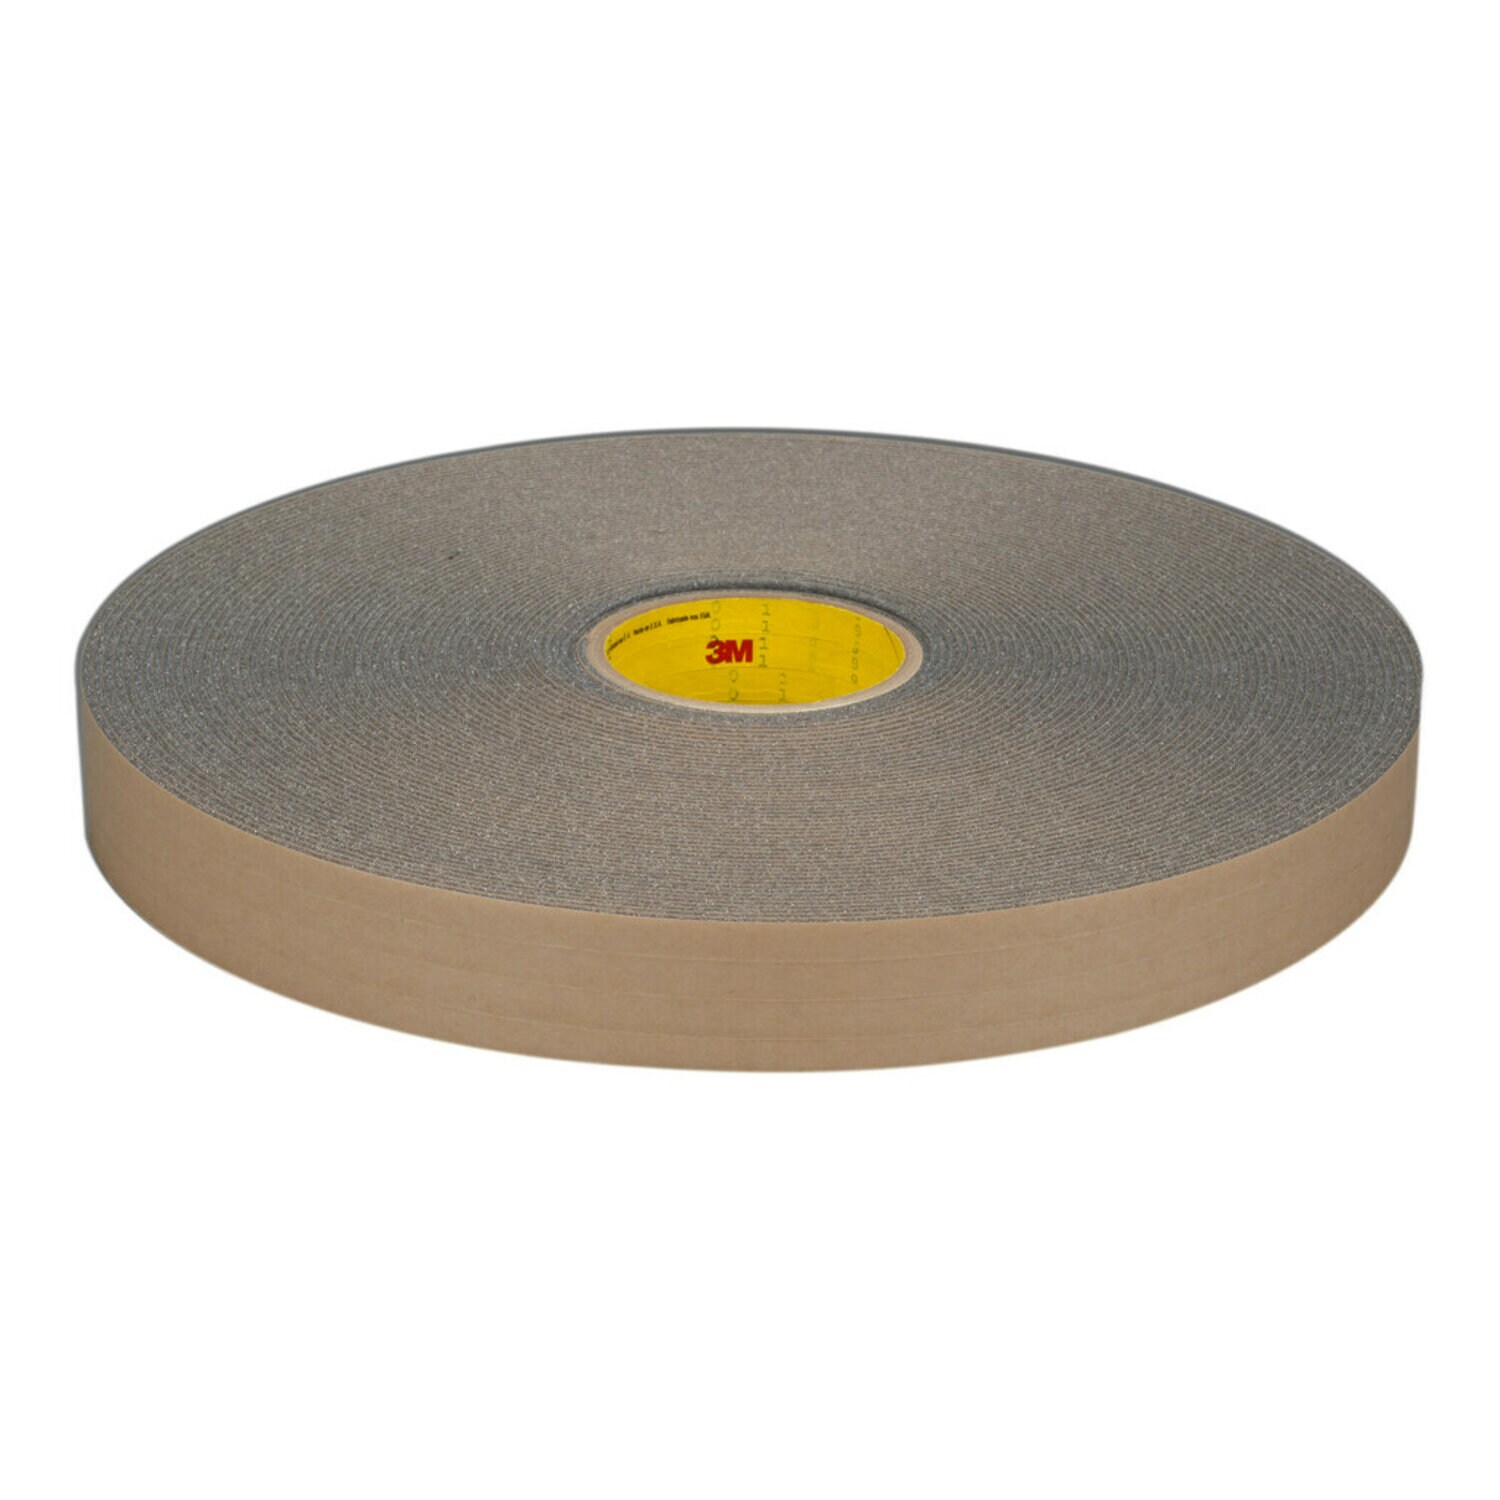 7000123395 - 3M Urethane Foam Tape 4318, Charcoal Gray, 1 in x 36 yd, 125 mil, 9
rolls per case